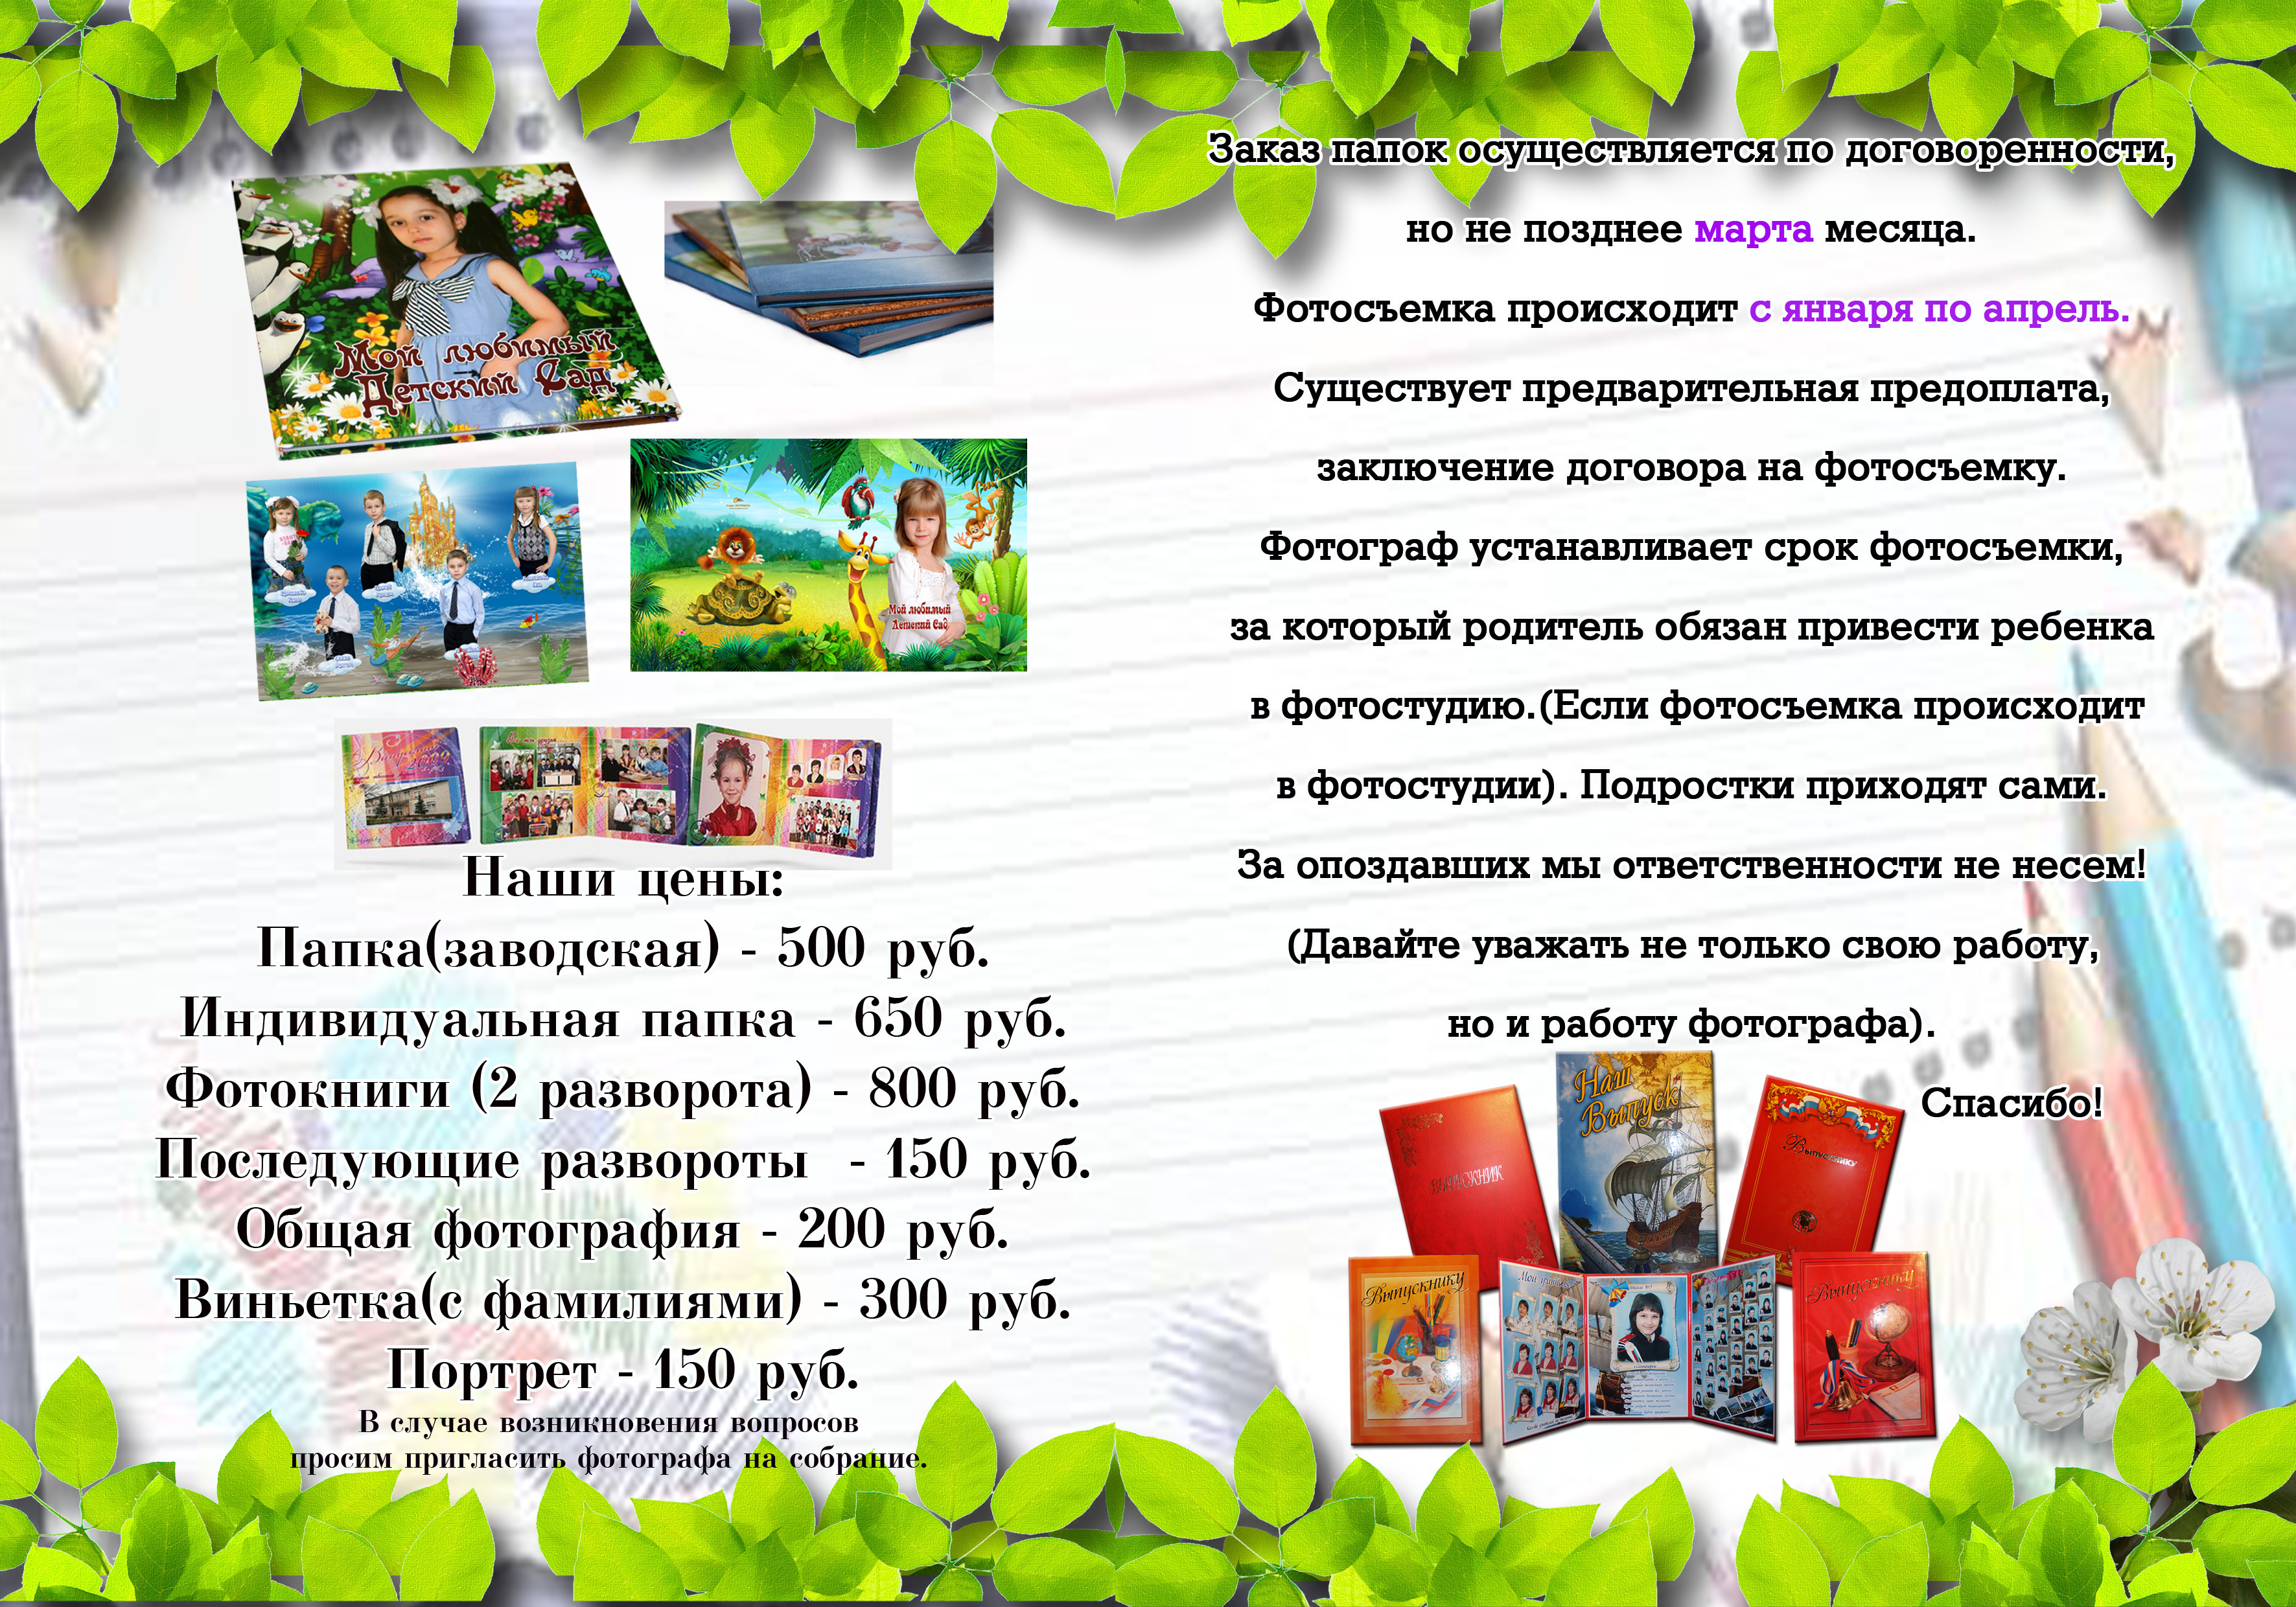 Саяногорск Инфо - vnutrennyaya-broshura.jpg, Скачано: 858